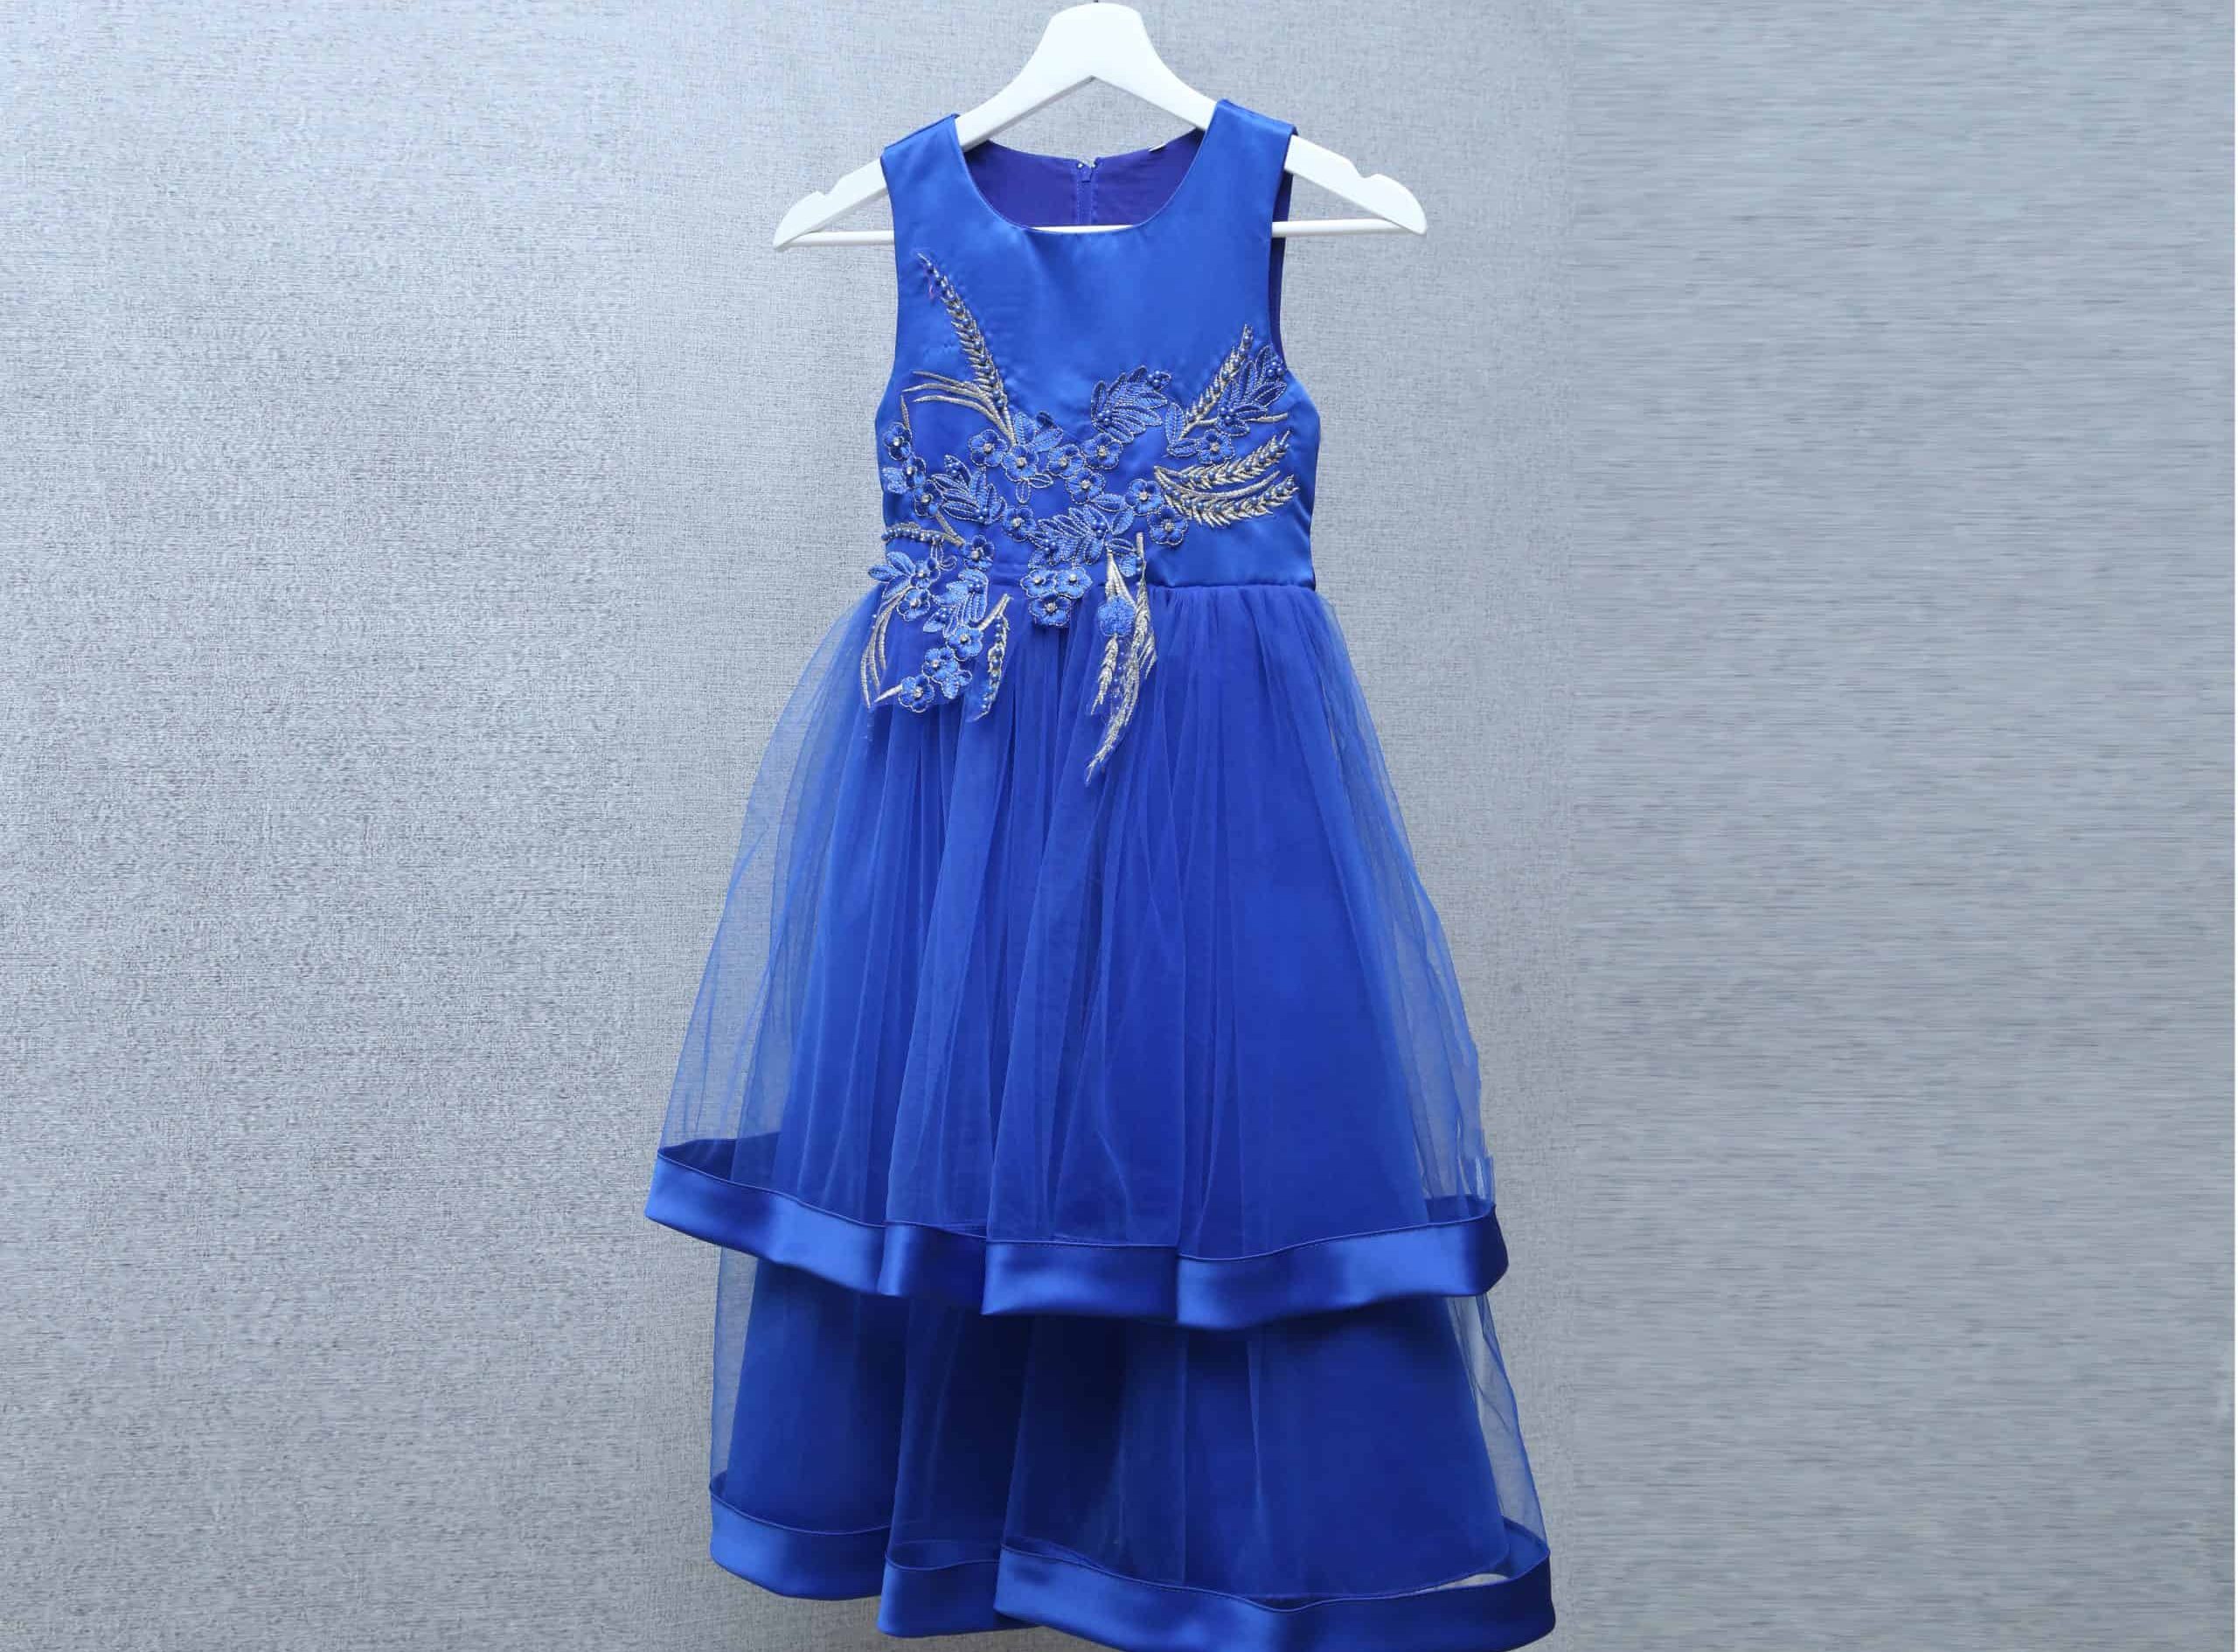 Party Princess Dress (1)